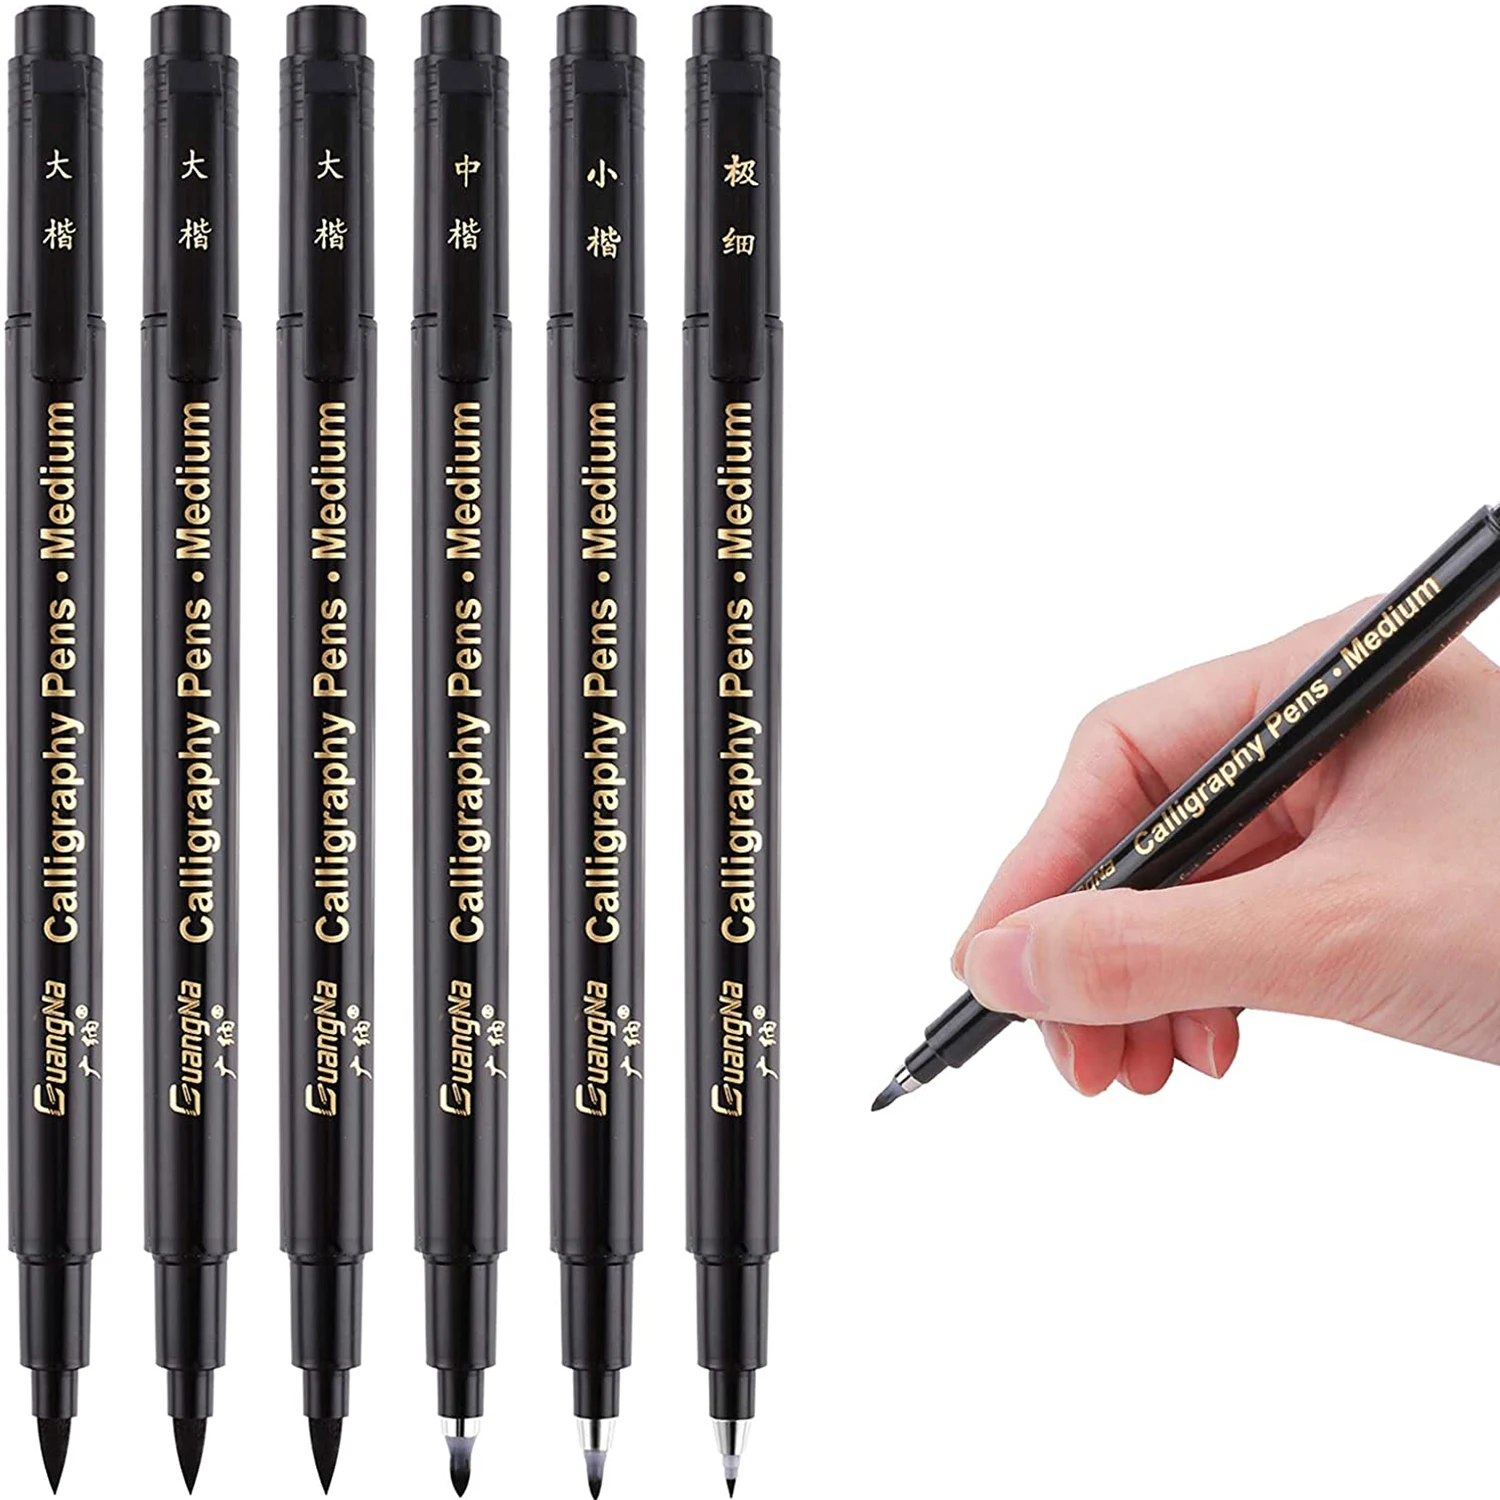 

6pcs Calligraphy Pens Set for Beginners,Hand Lettering Pen,4 Size Refillable Brush&Fine Tip Black Markers for Kids,Writing